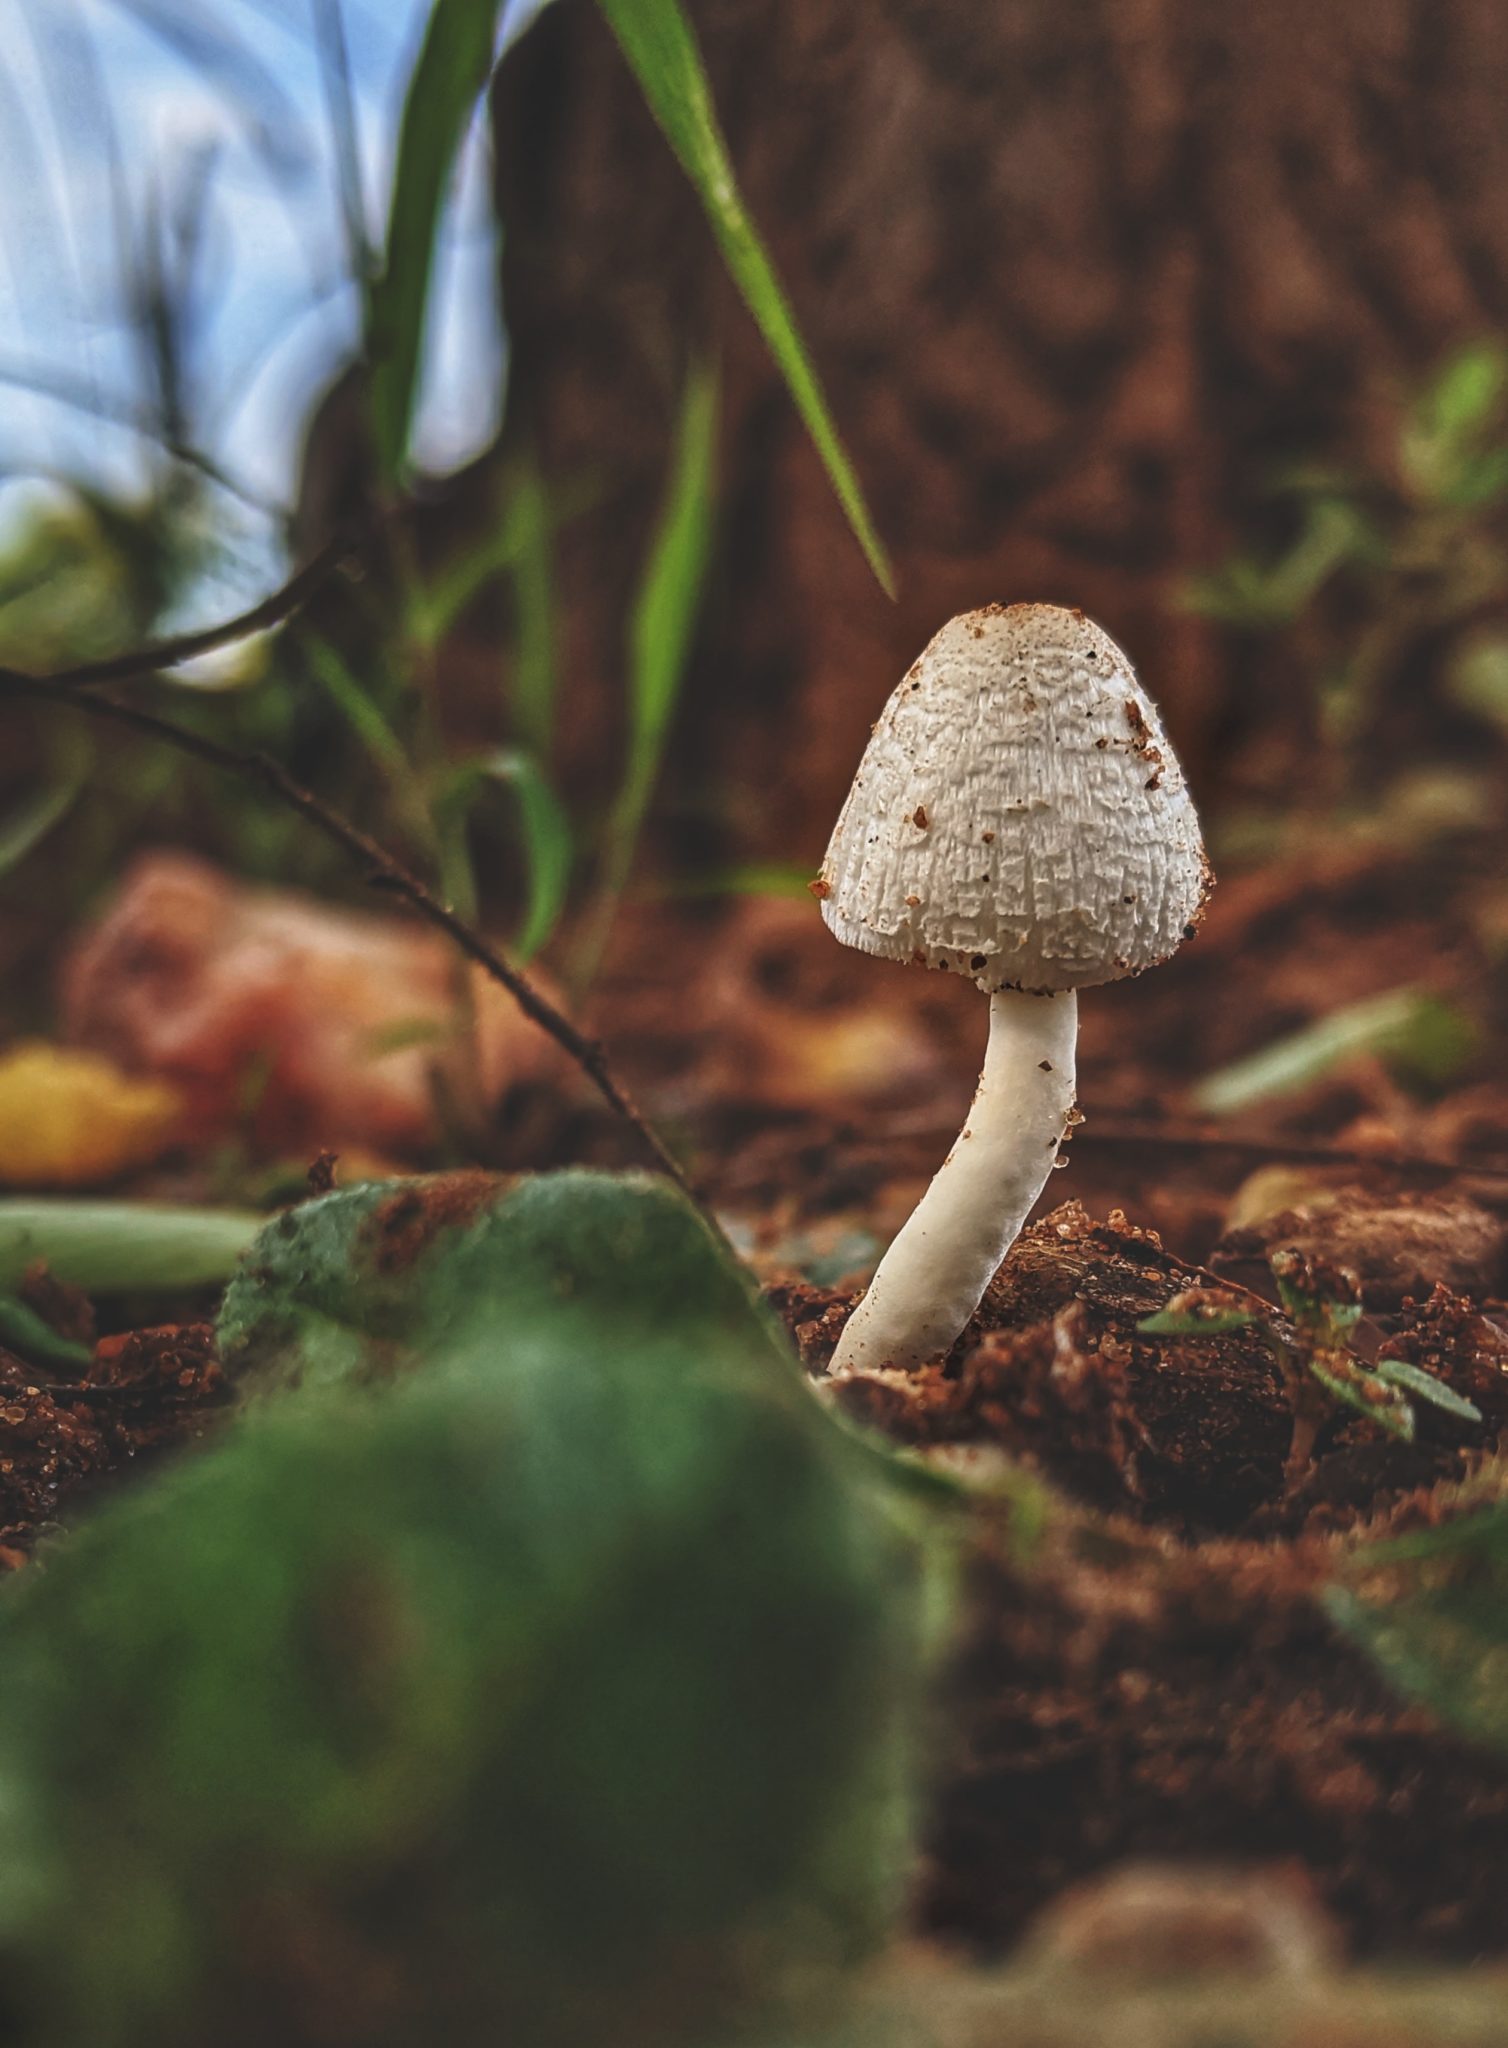 psilocybin mushroom growing in the forest